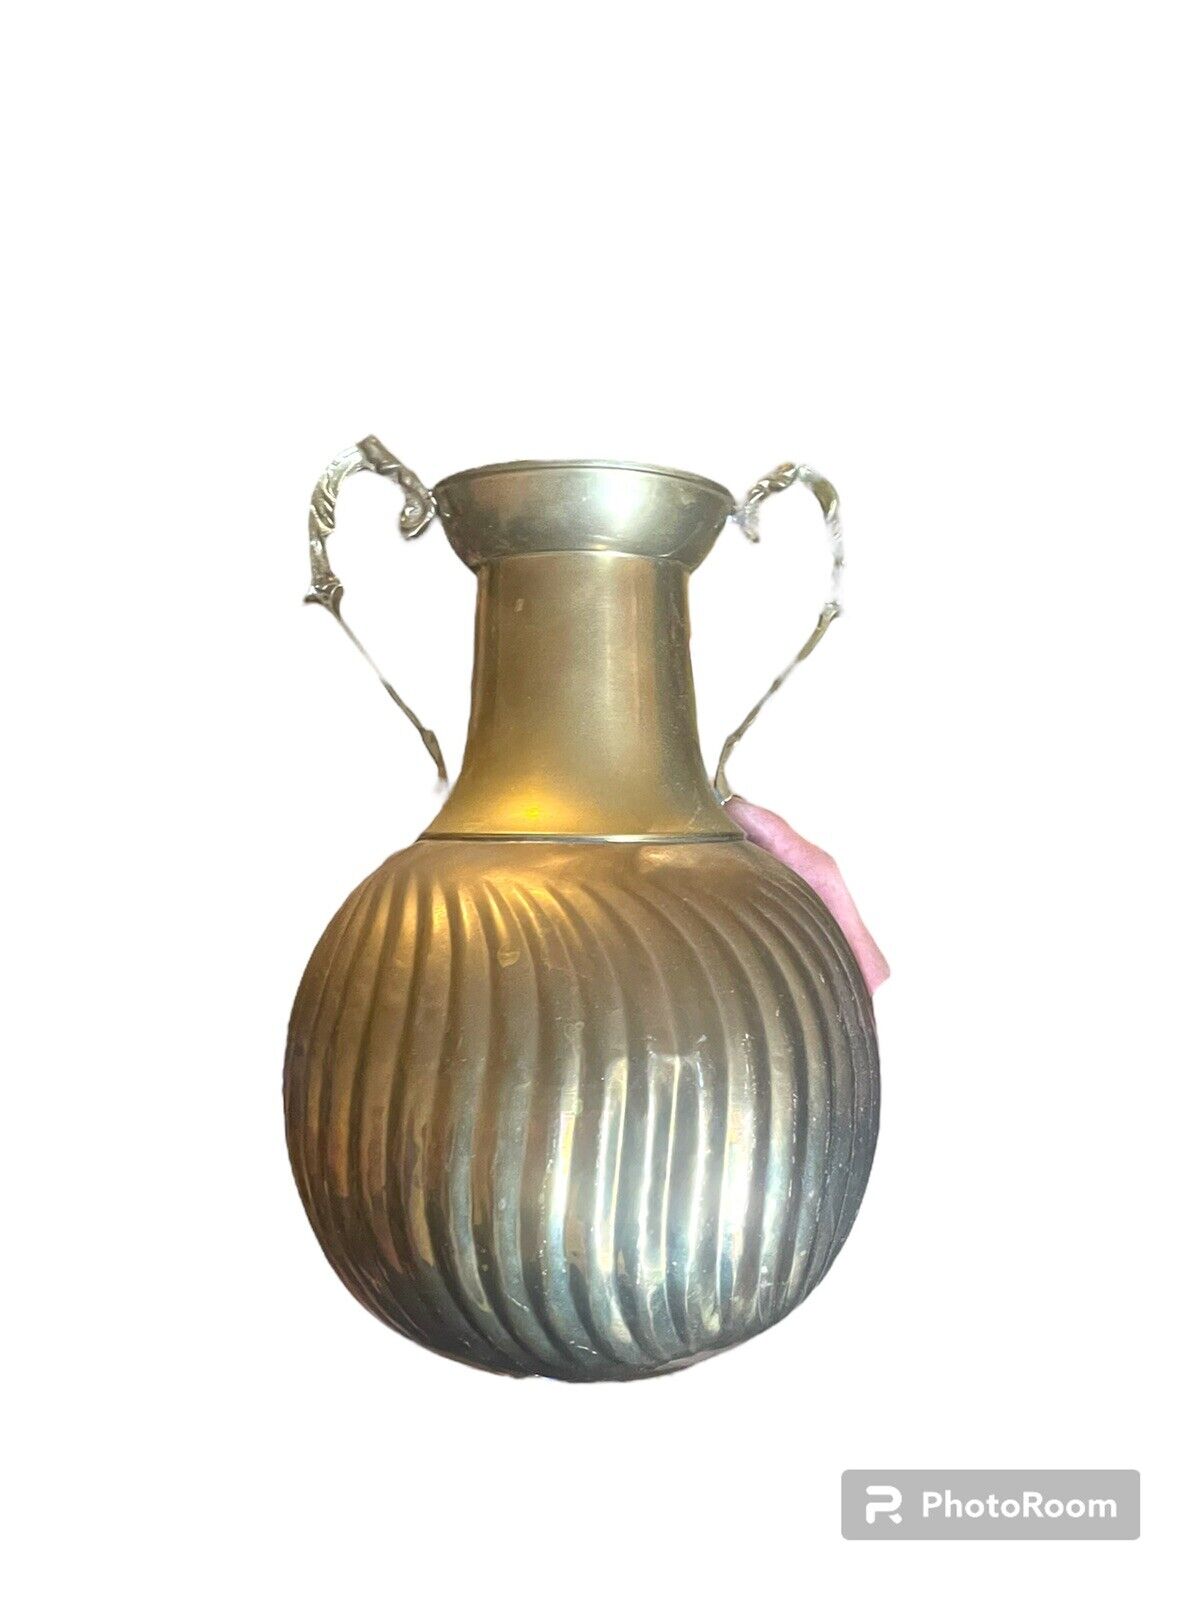 Vintage Brass Vase Handled Pitcher Made In India